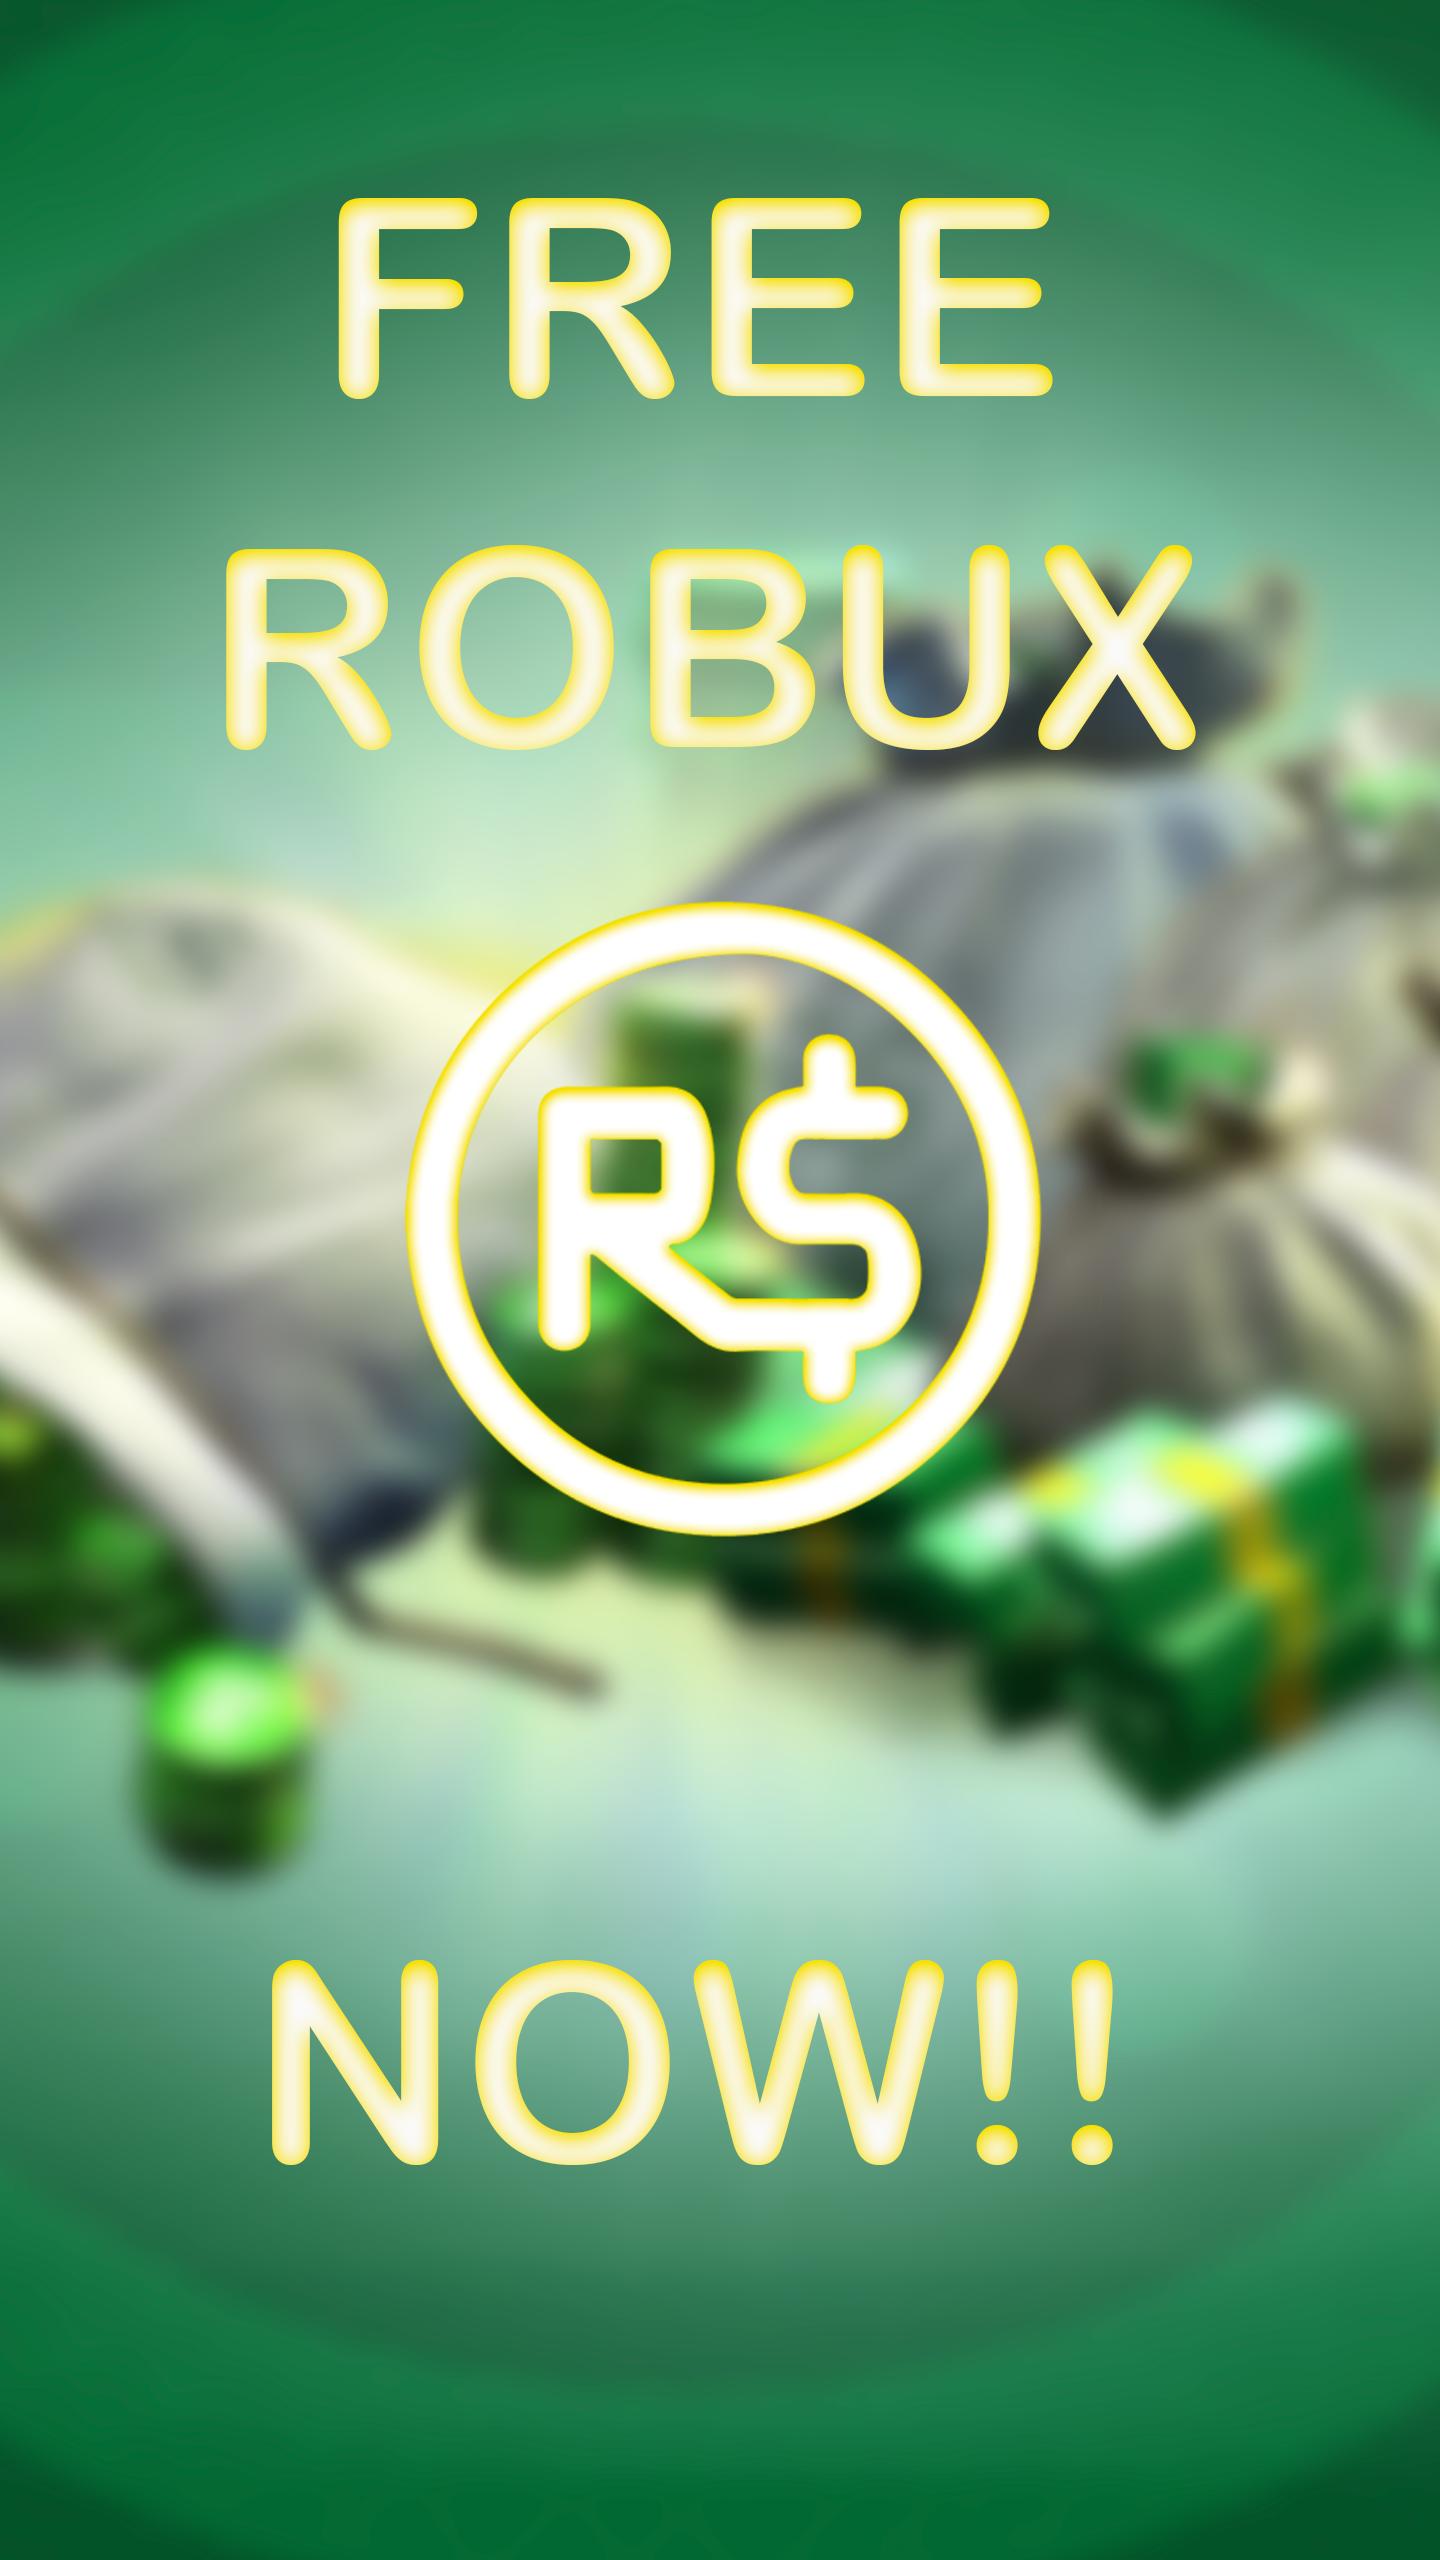 Robux Gratis 2019 Como Ganar Robux Gratis Ahora For Android Apk Download - conseguir robux gratis legal